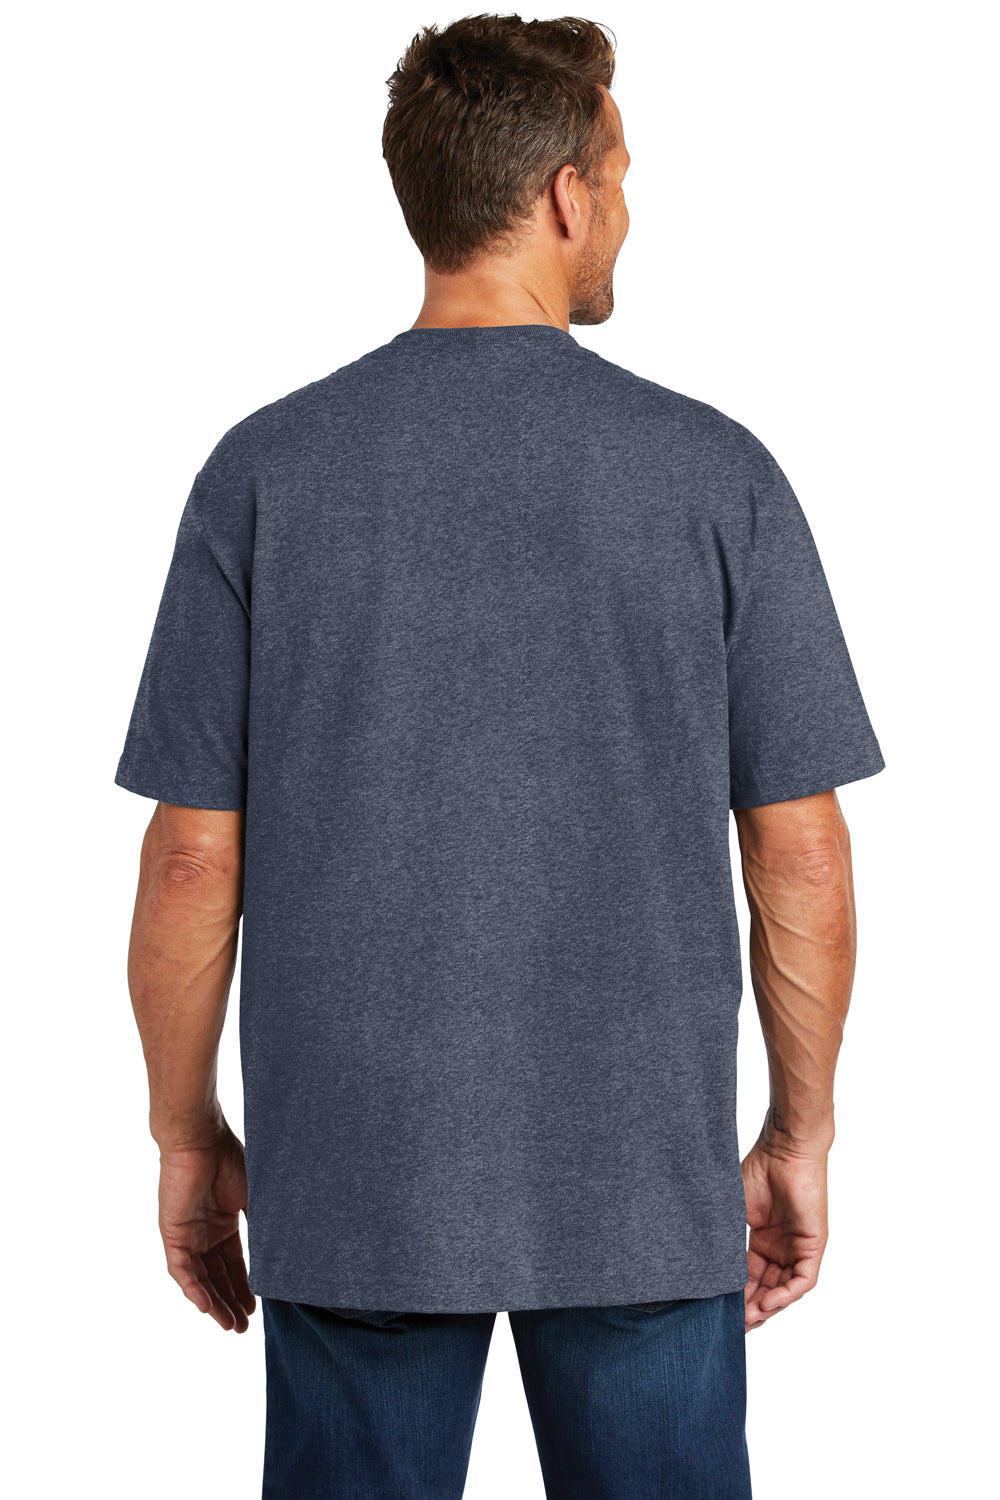 Carhartt CTK87 Mens Workwear Short Sleeve Crewneck T-Shirt w/ Pocket Heather Cobalt Blue Back